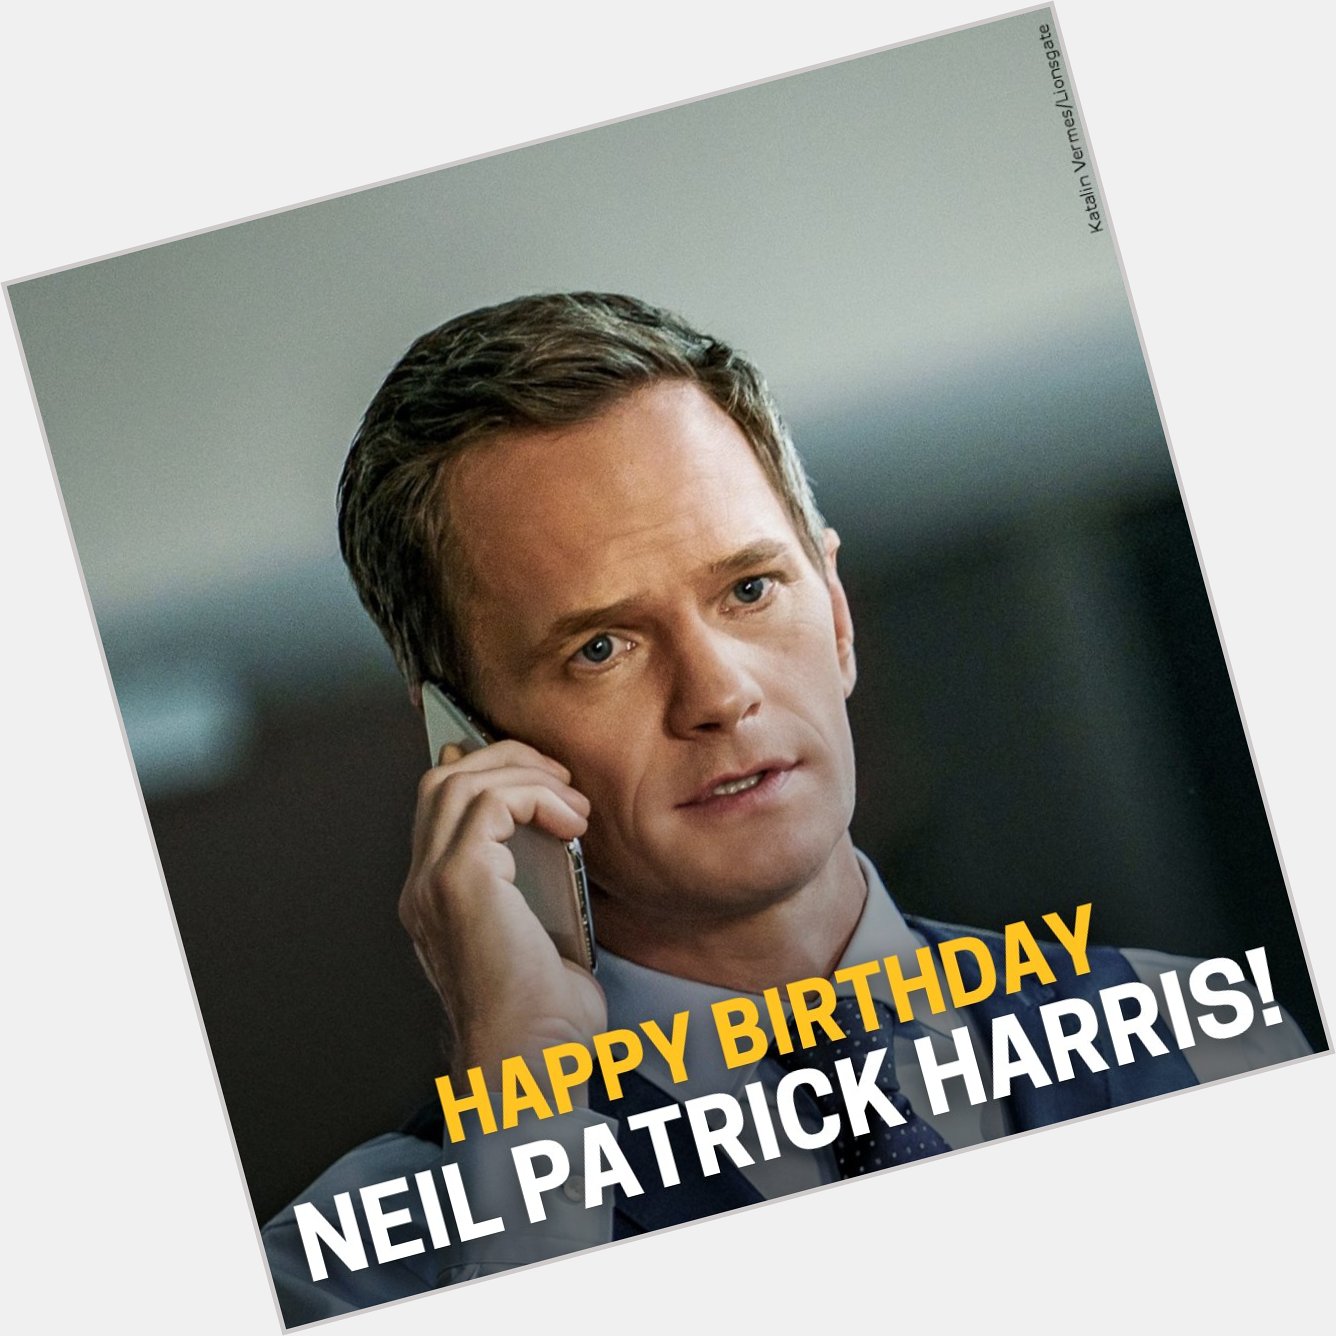  Happy birthday to Neil Patrick Harris! 